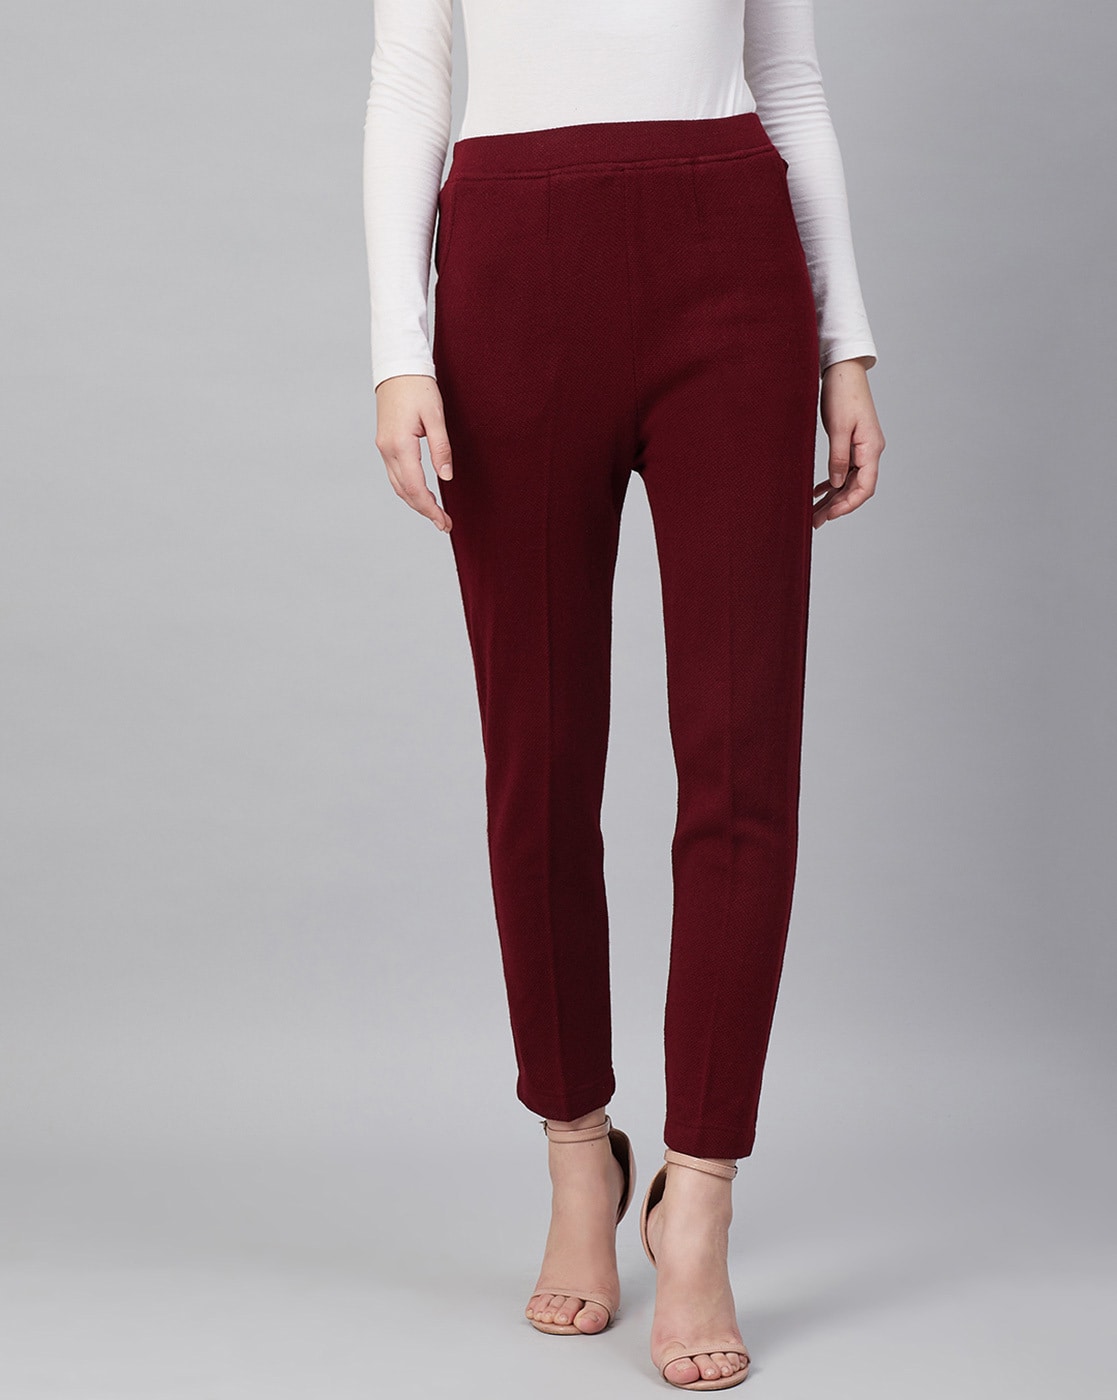 Buy INDYA Maroon Solid Velvet Regular Fit Women's Casual Trousers |  Shoppers Stop